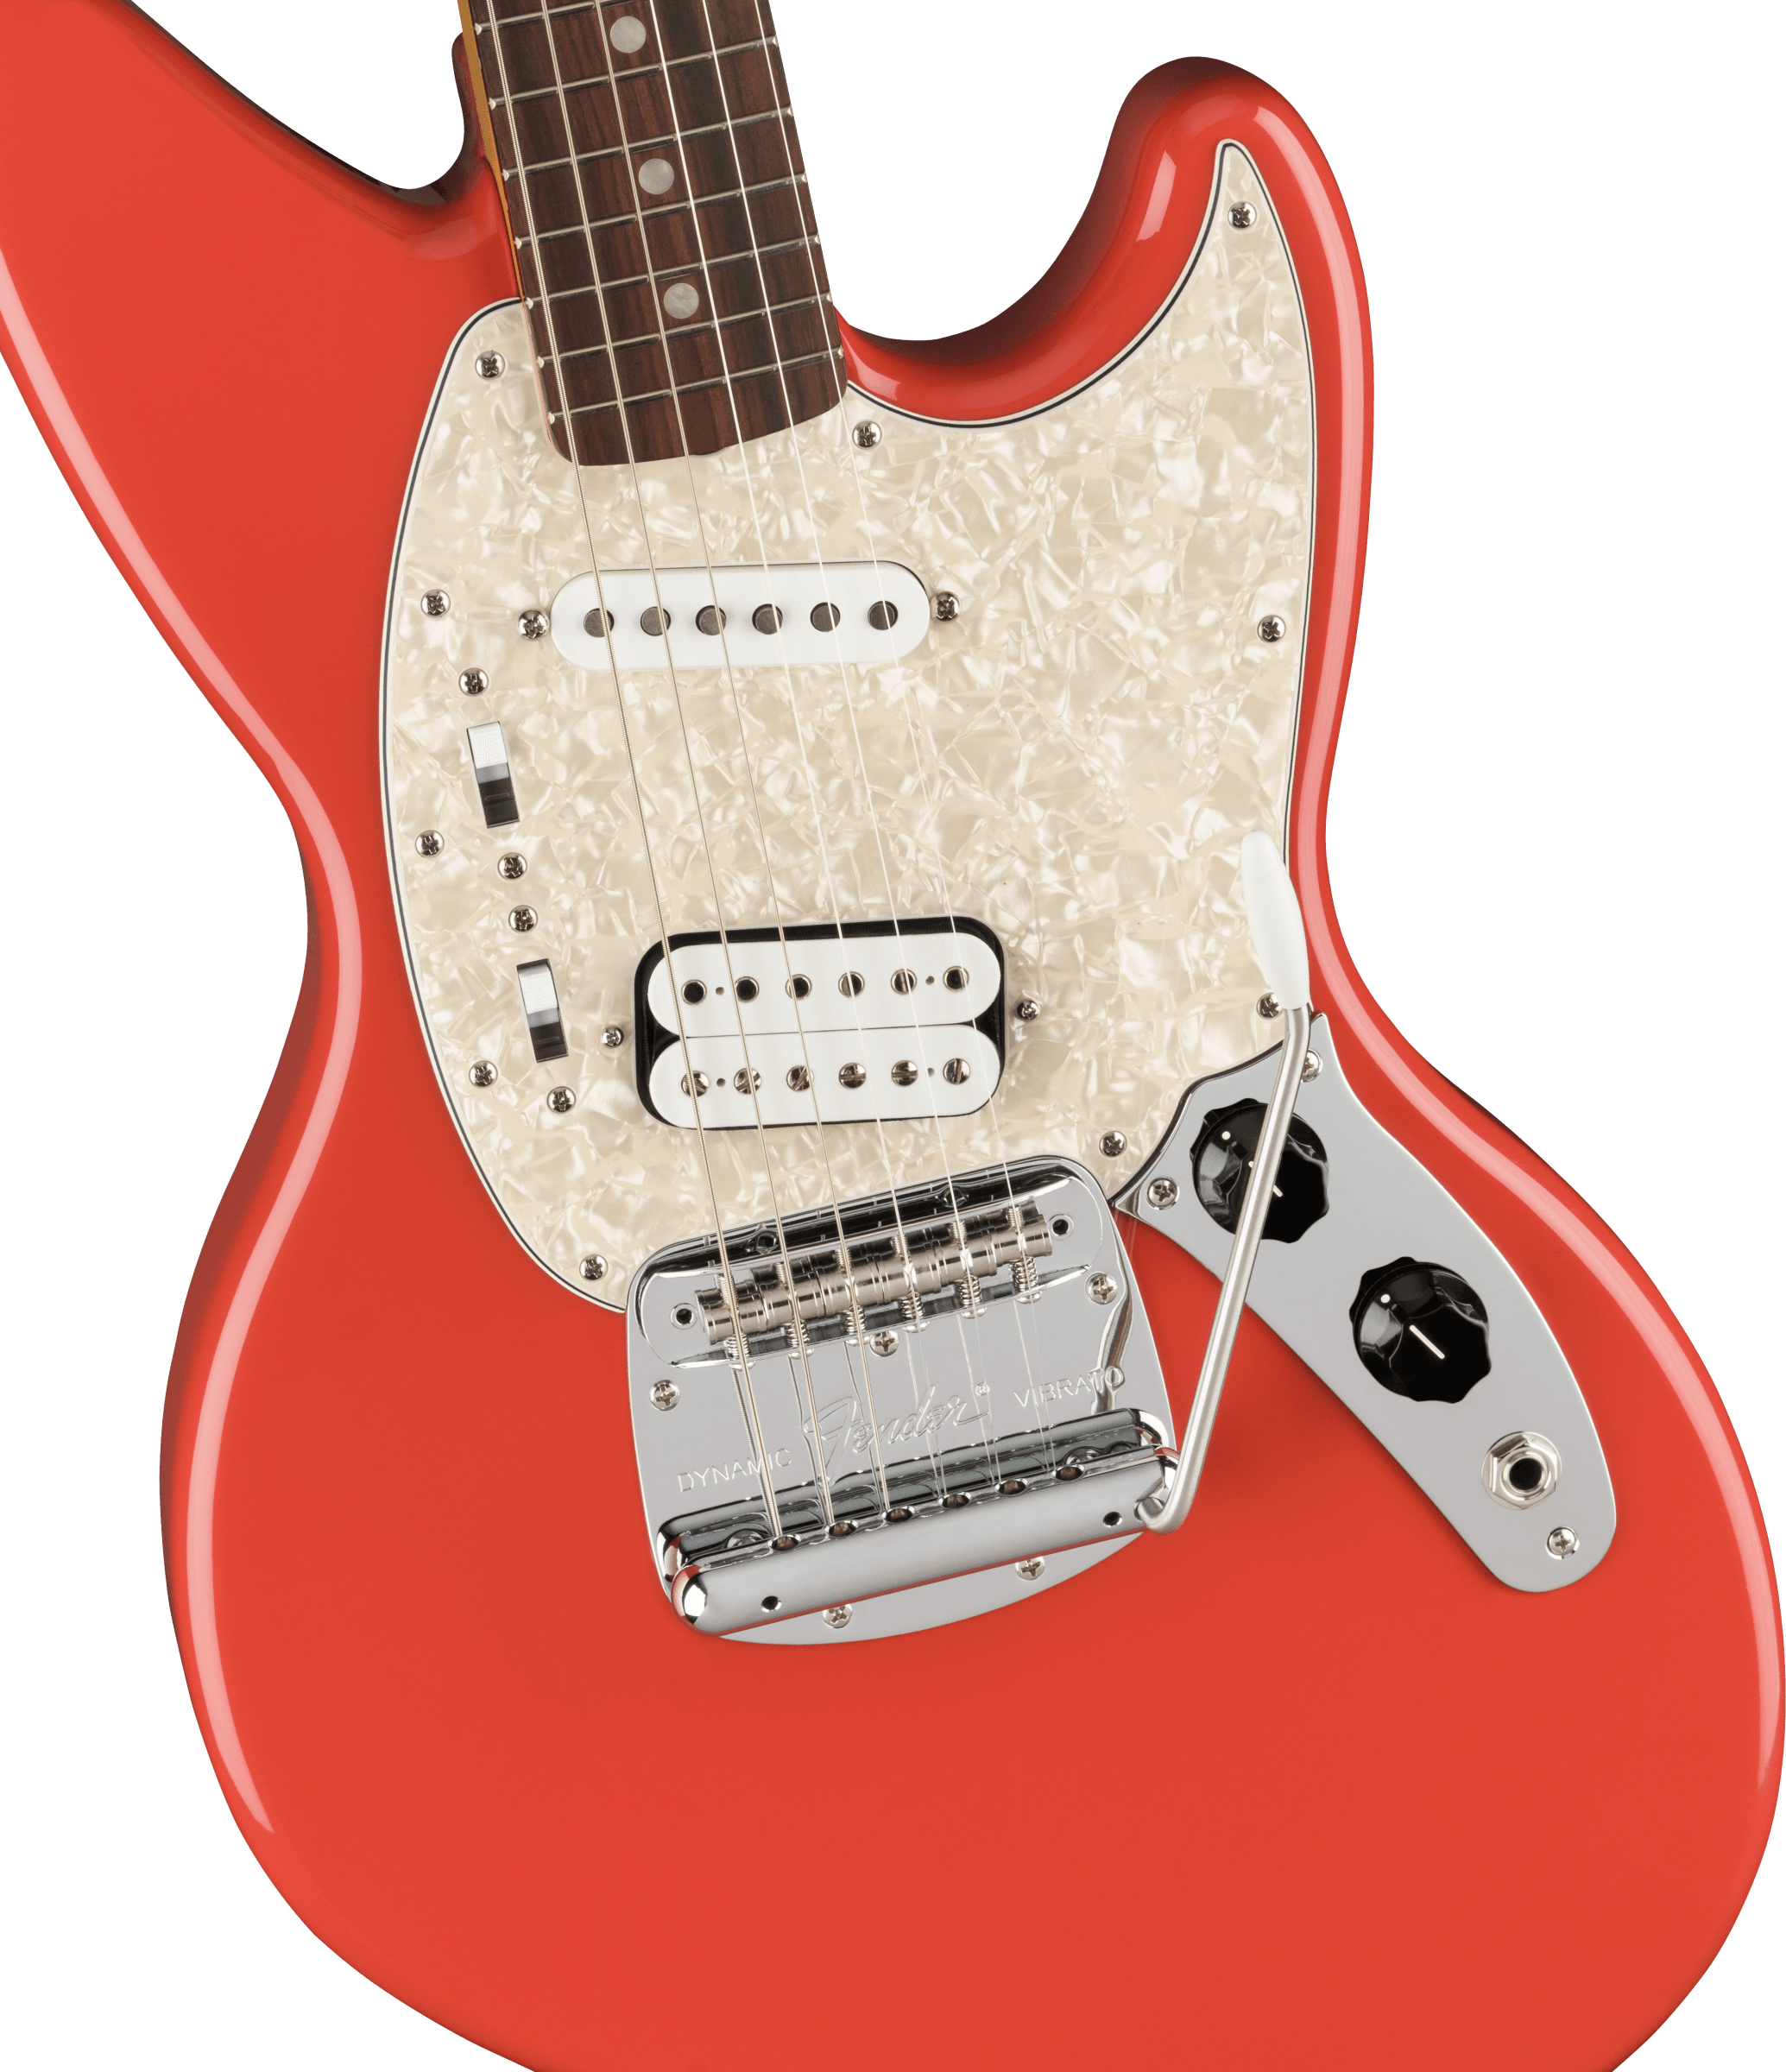 Fender Jag-stang Kurt Cobain Artist Hs Trem Rw - Fiesta Red - Retro-rock elektrische gitaar - Variation 2